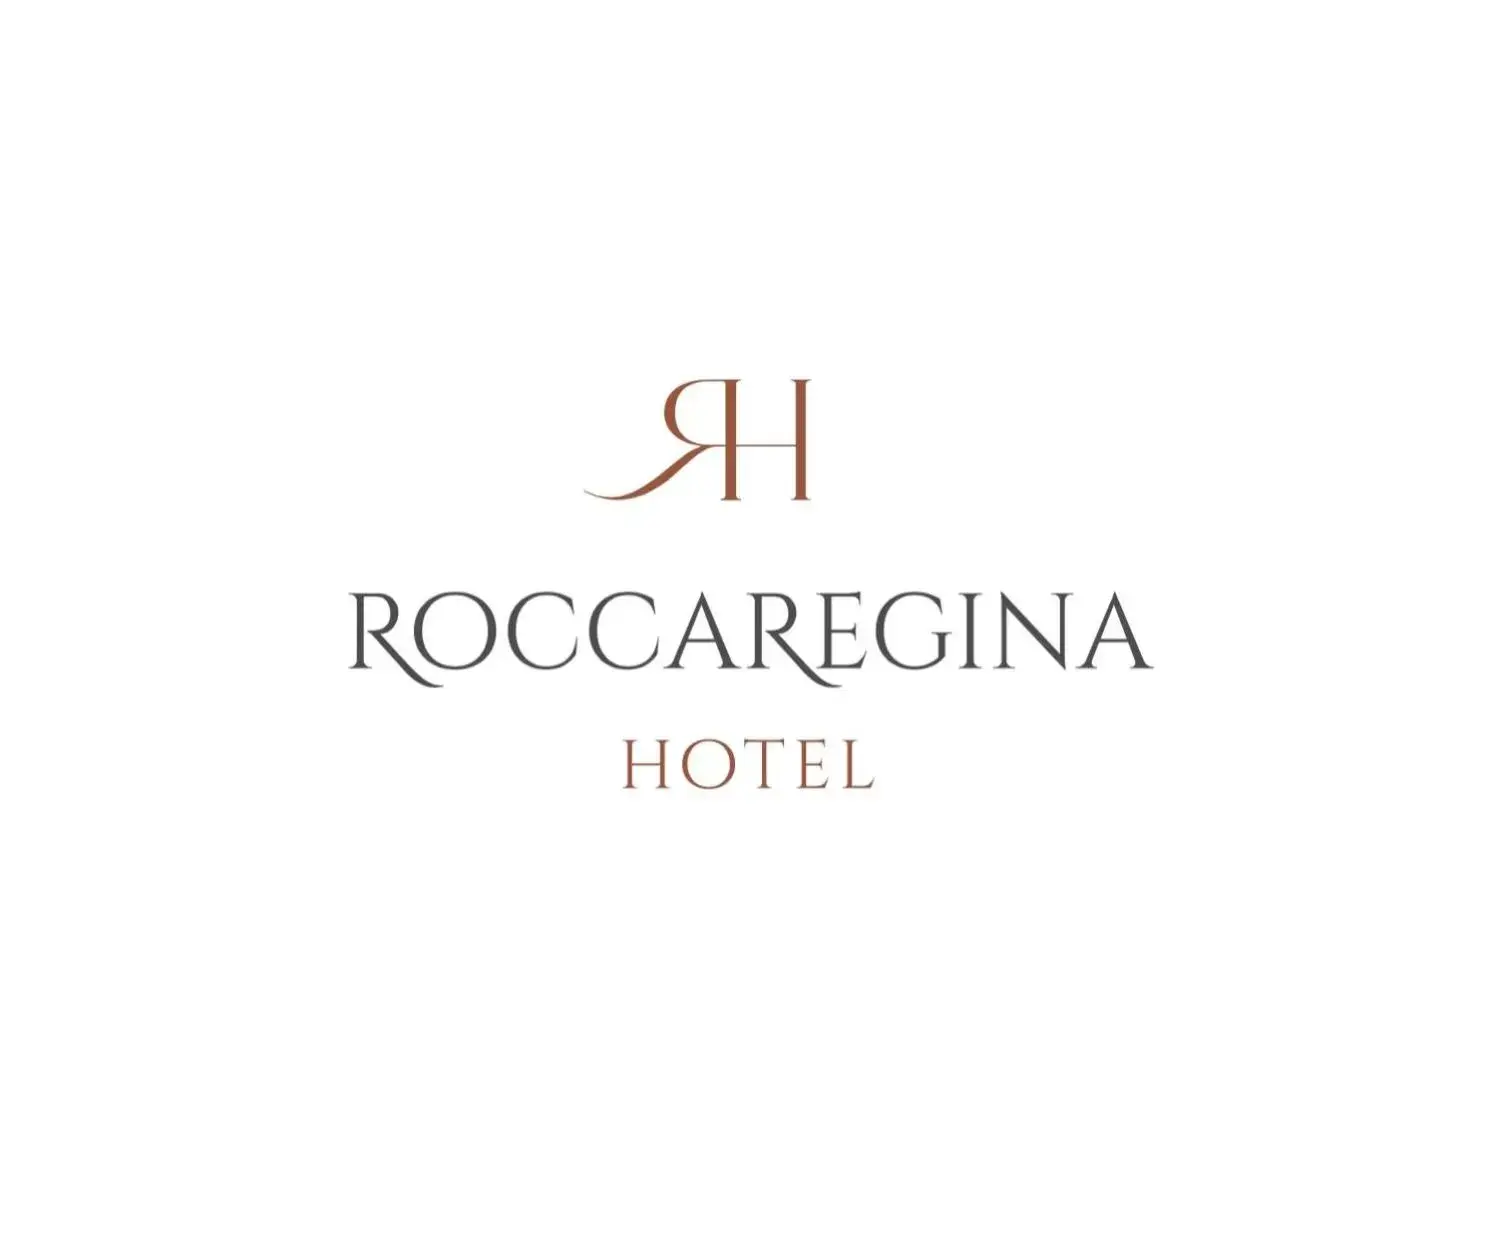 Property logo or sign in RoccaRegina Hotel